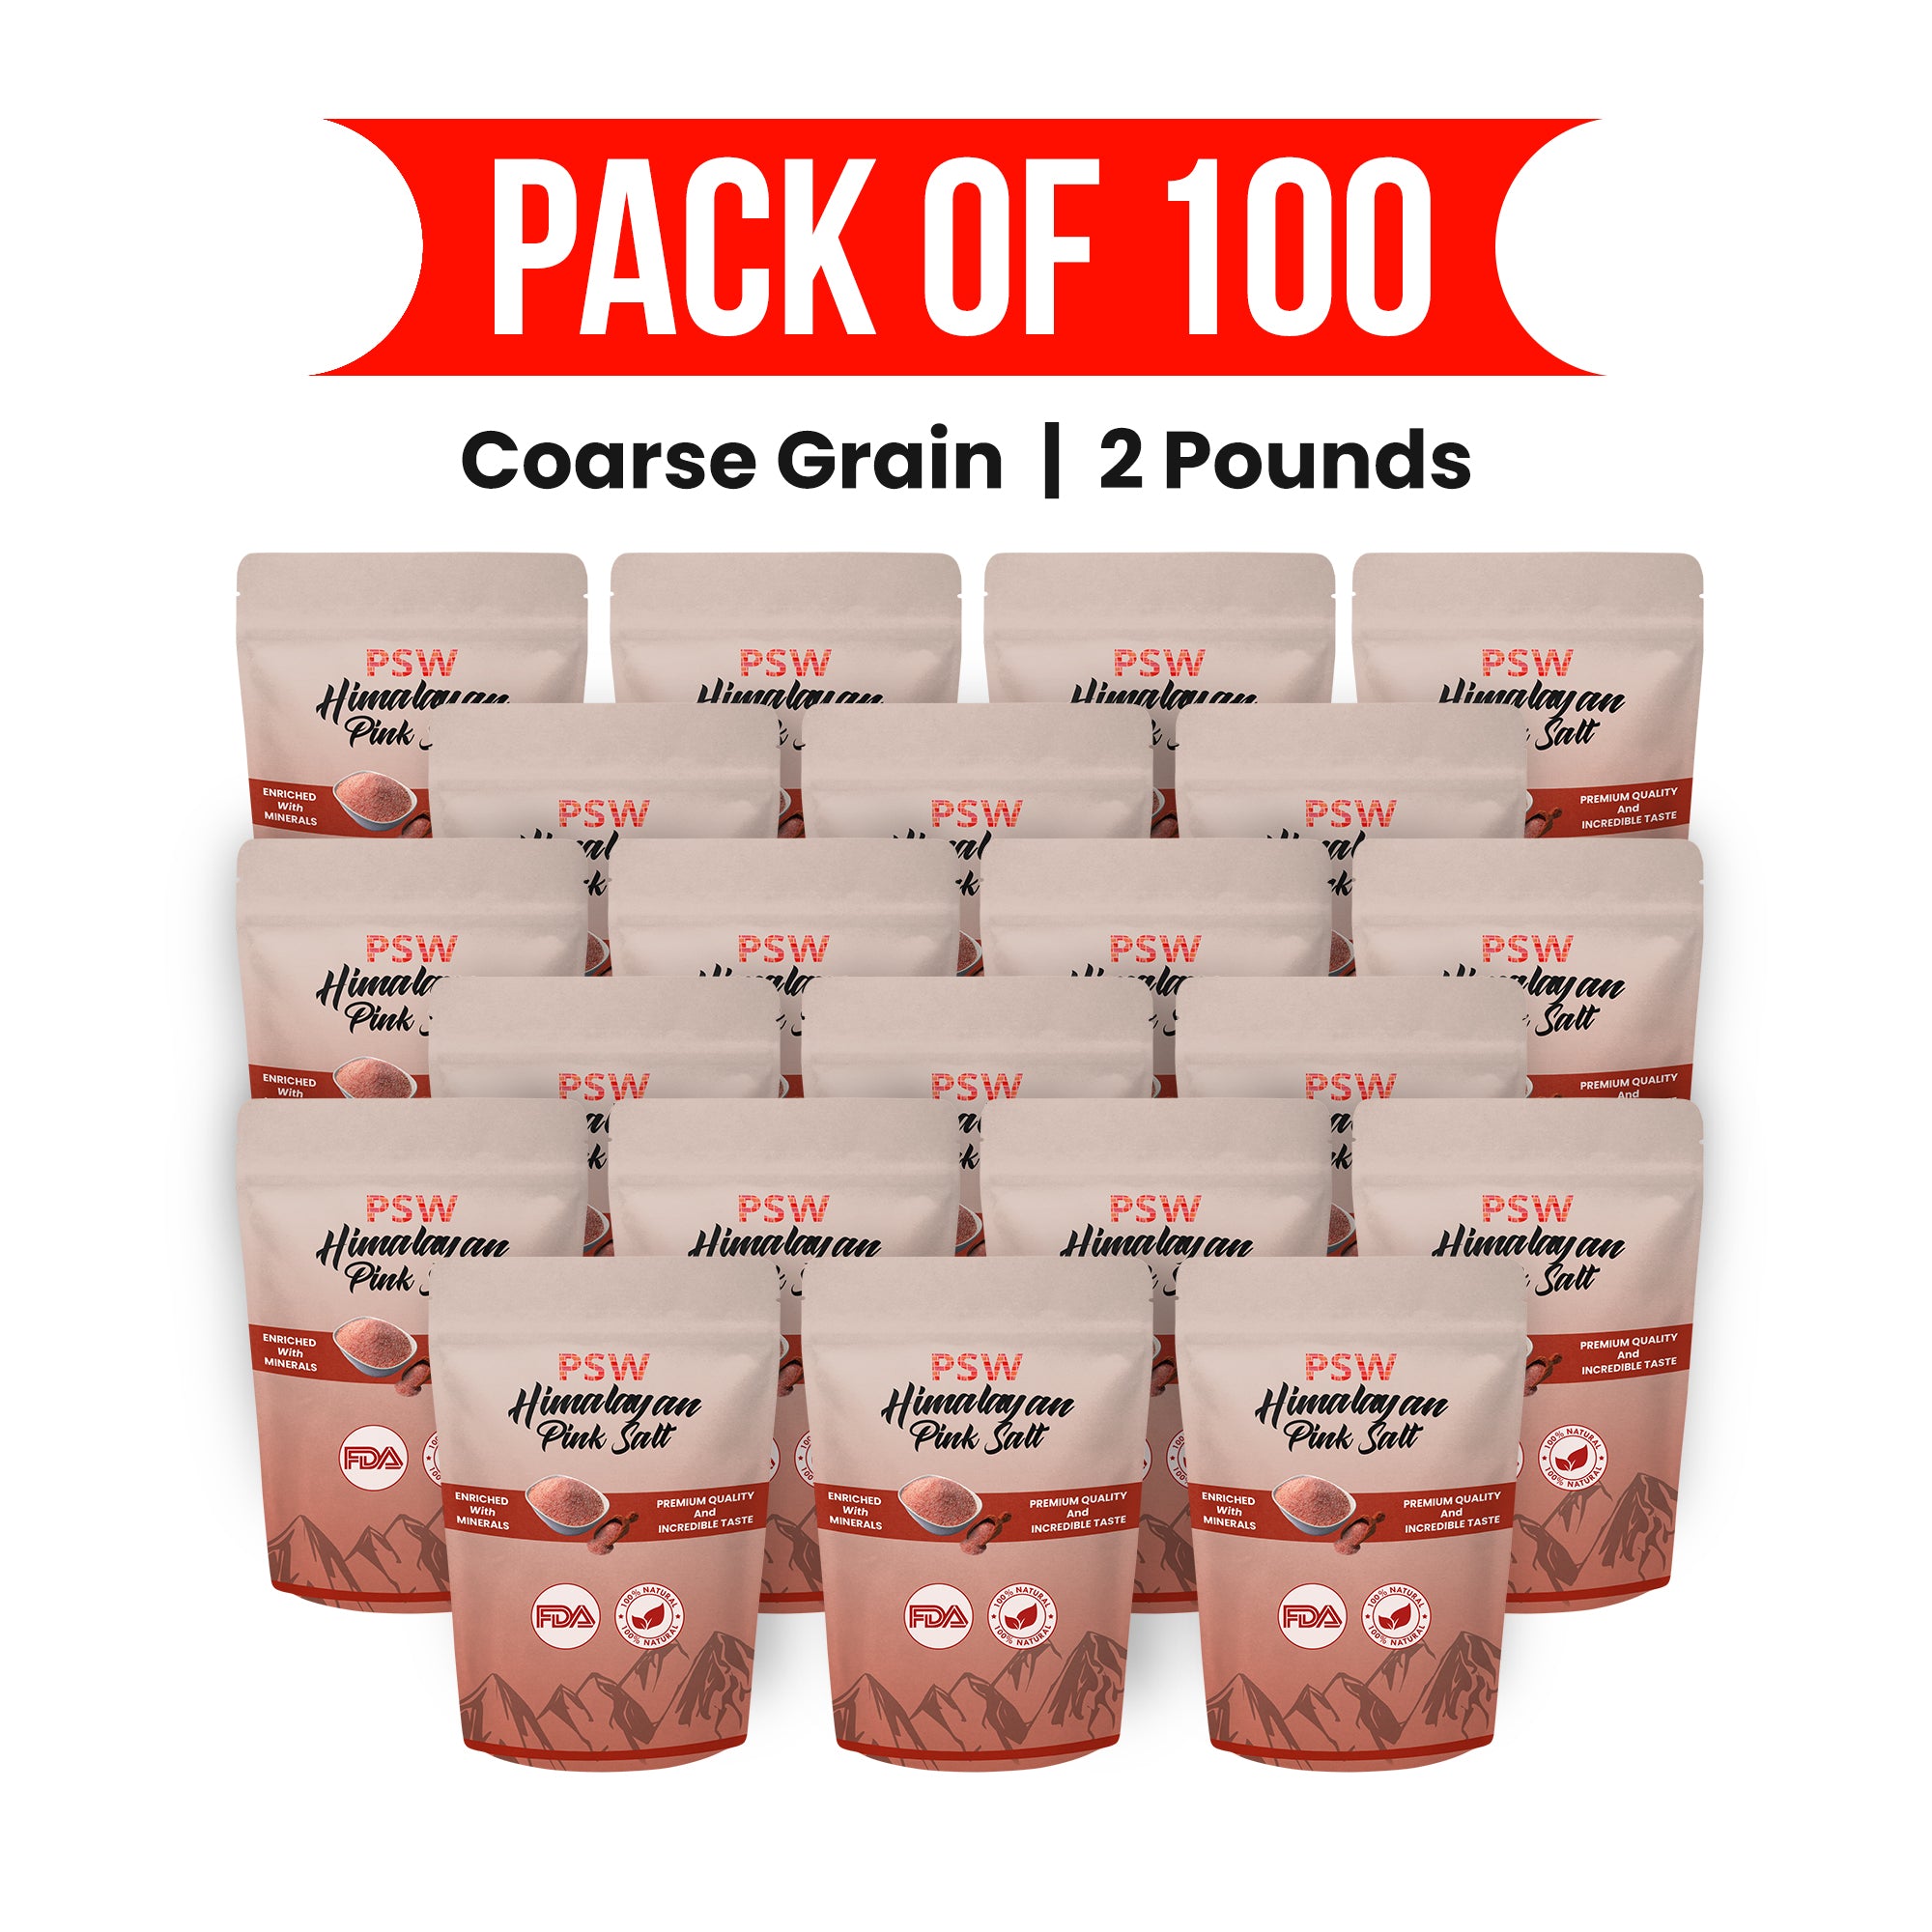 Edible Himalayan Pink Salt - Coarse Grain - Pack of 100 - 2 Pounds Each